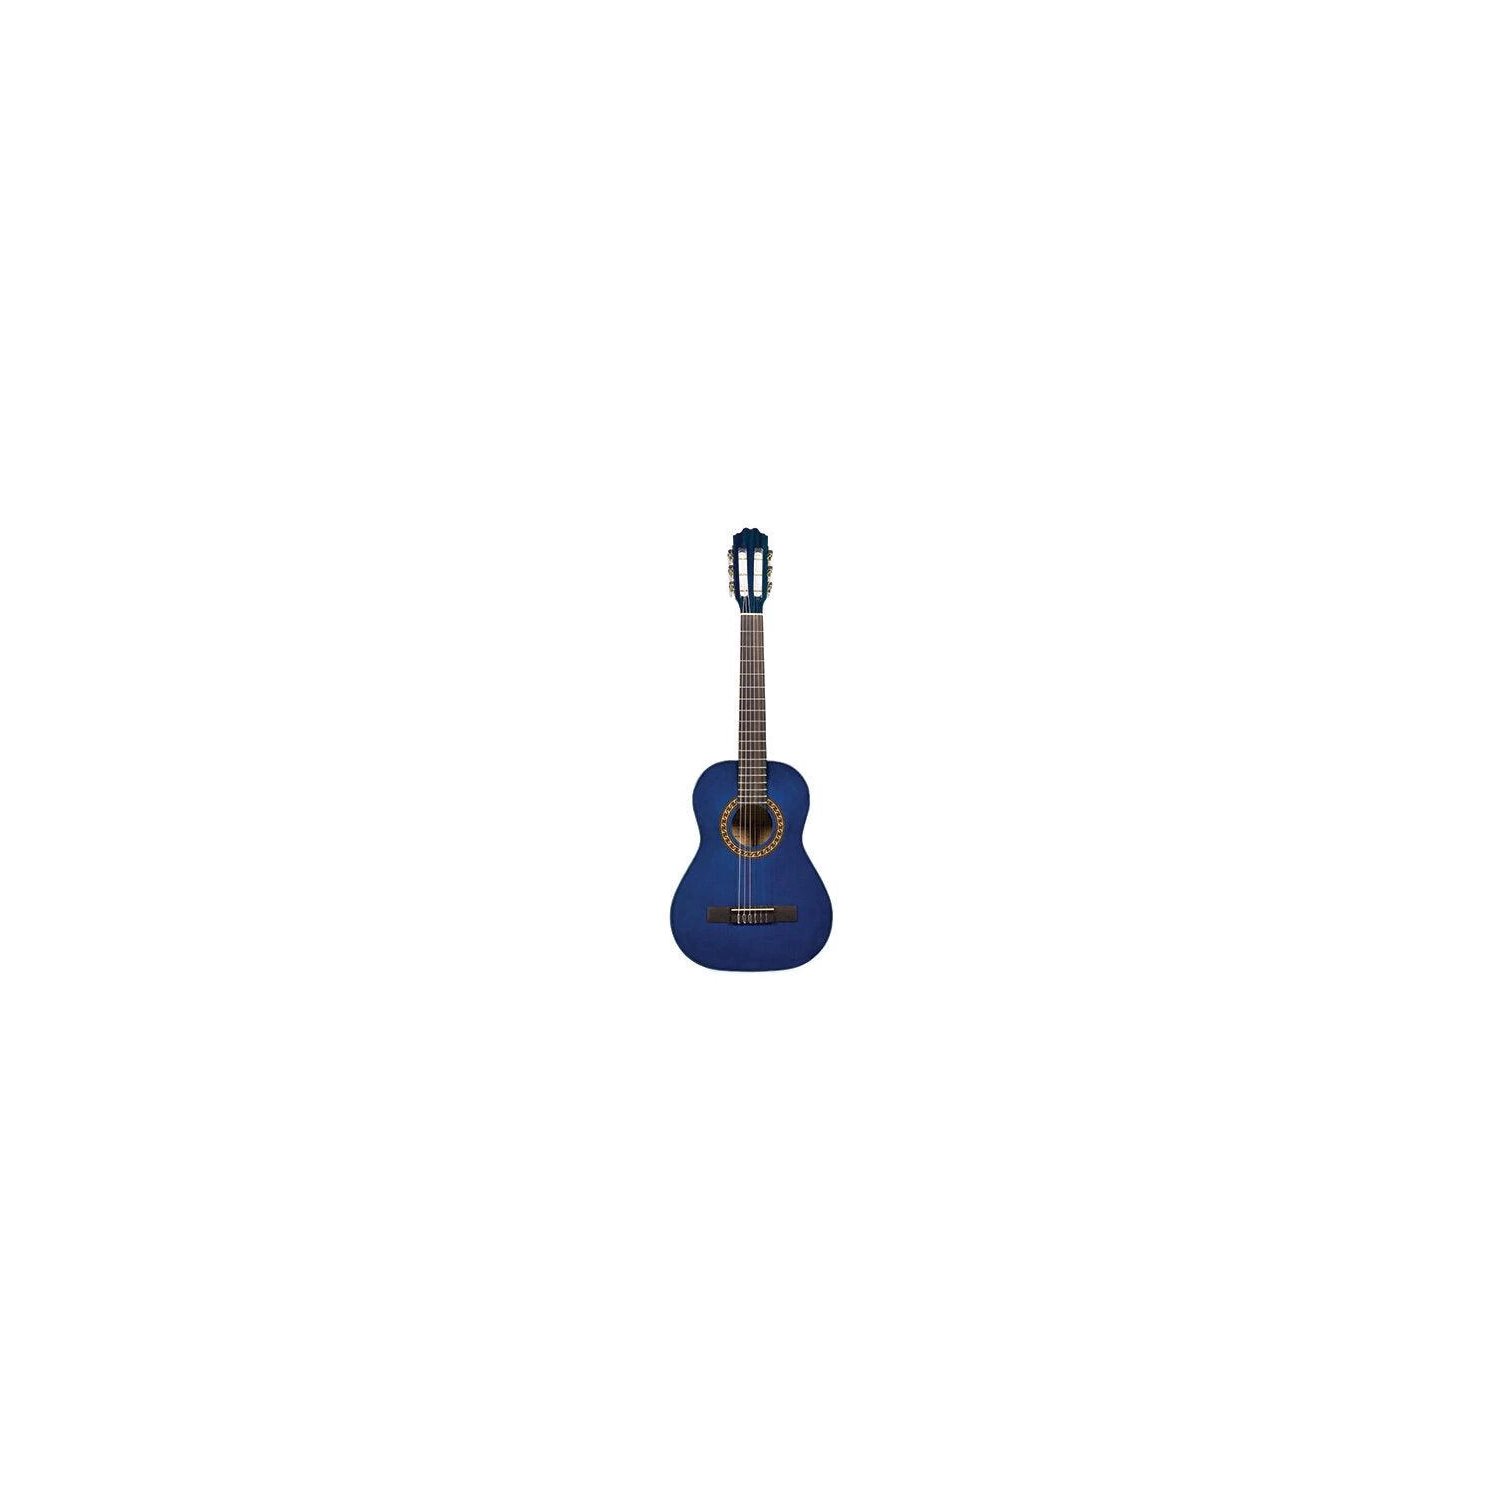 BEAVER CREEK - BCTC601TB - Classical Guitar ¾ Size - transparent blue